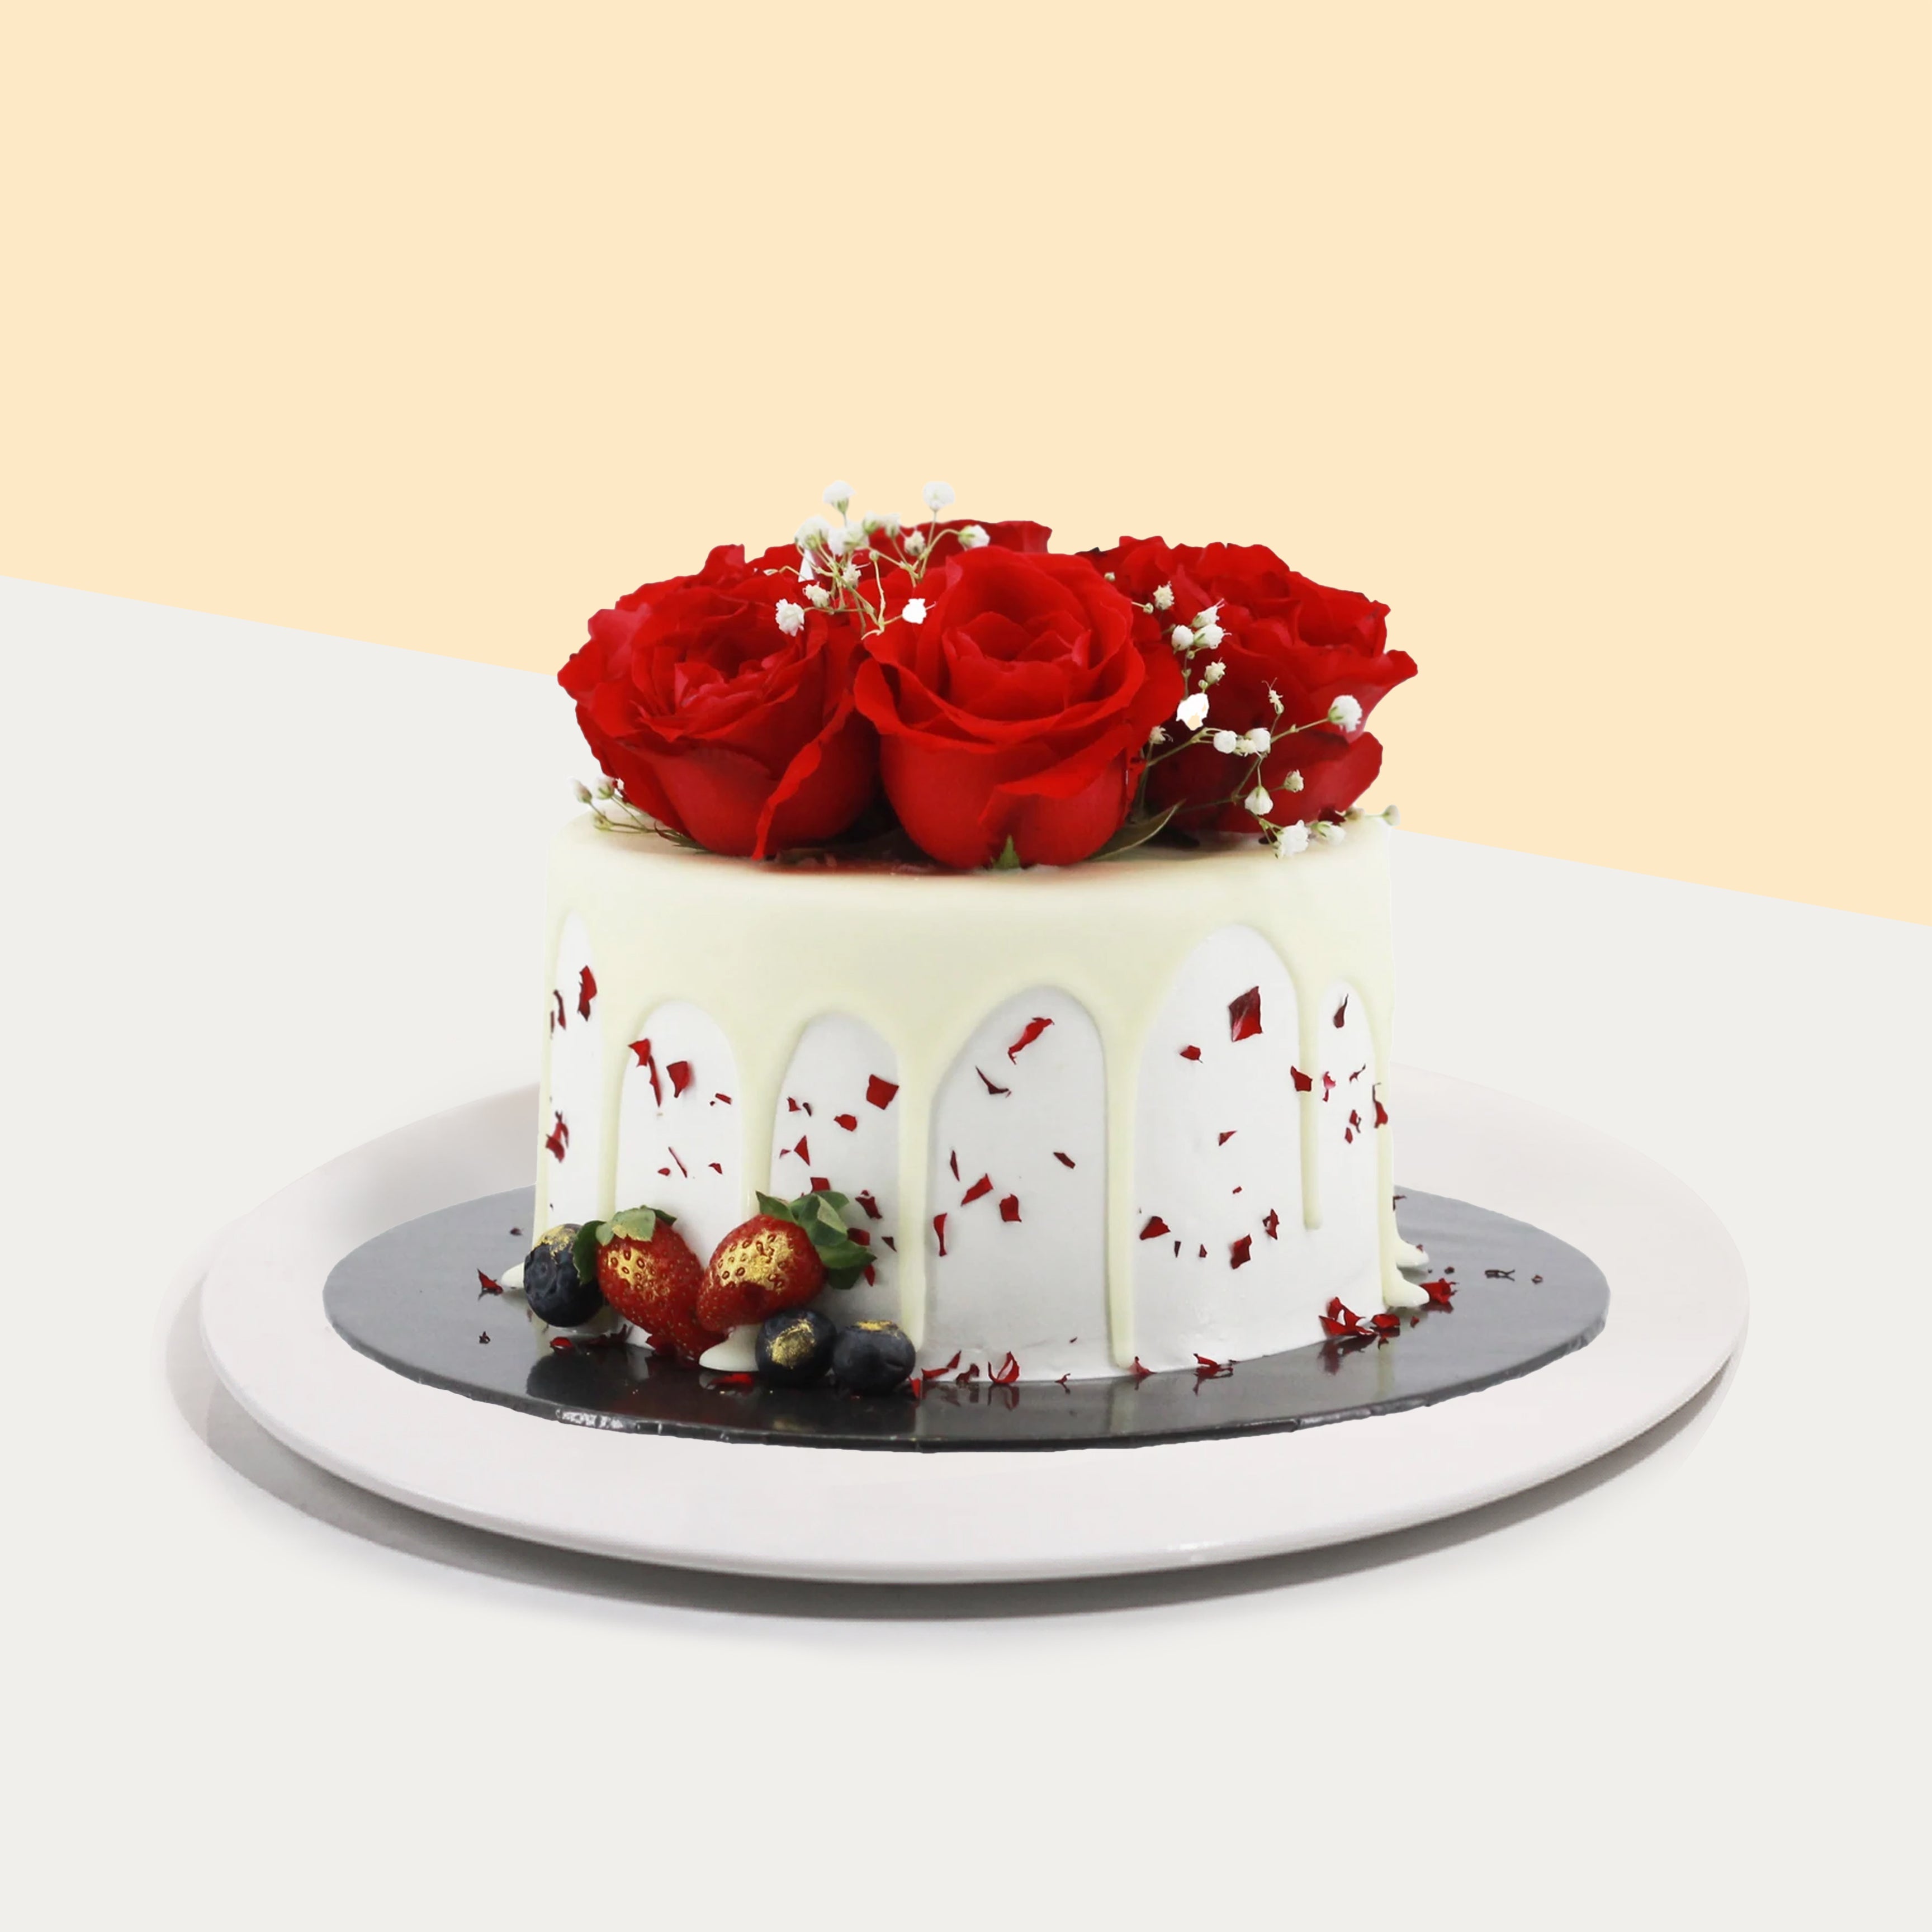 Order your dior birthday cake online